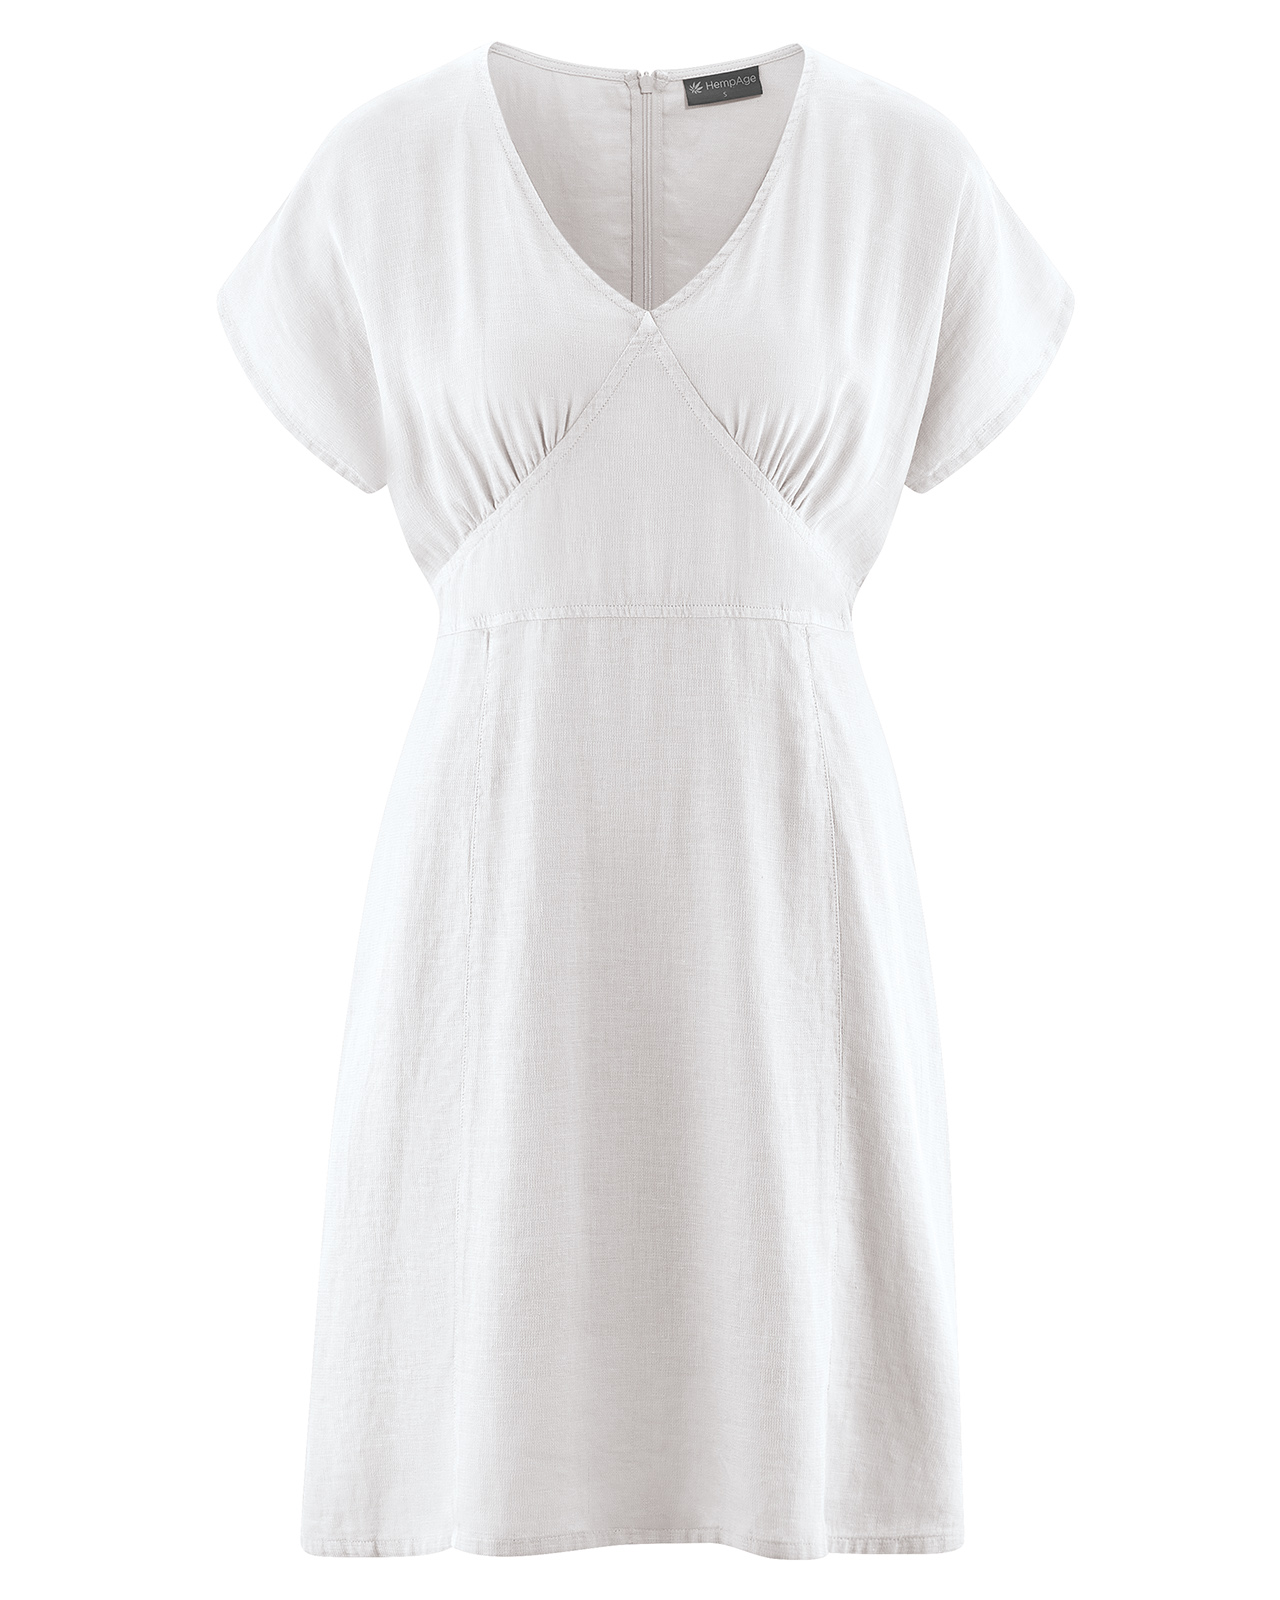 robe-chanvre-coton-bio_DH131_a_white